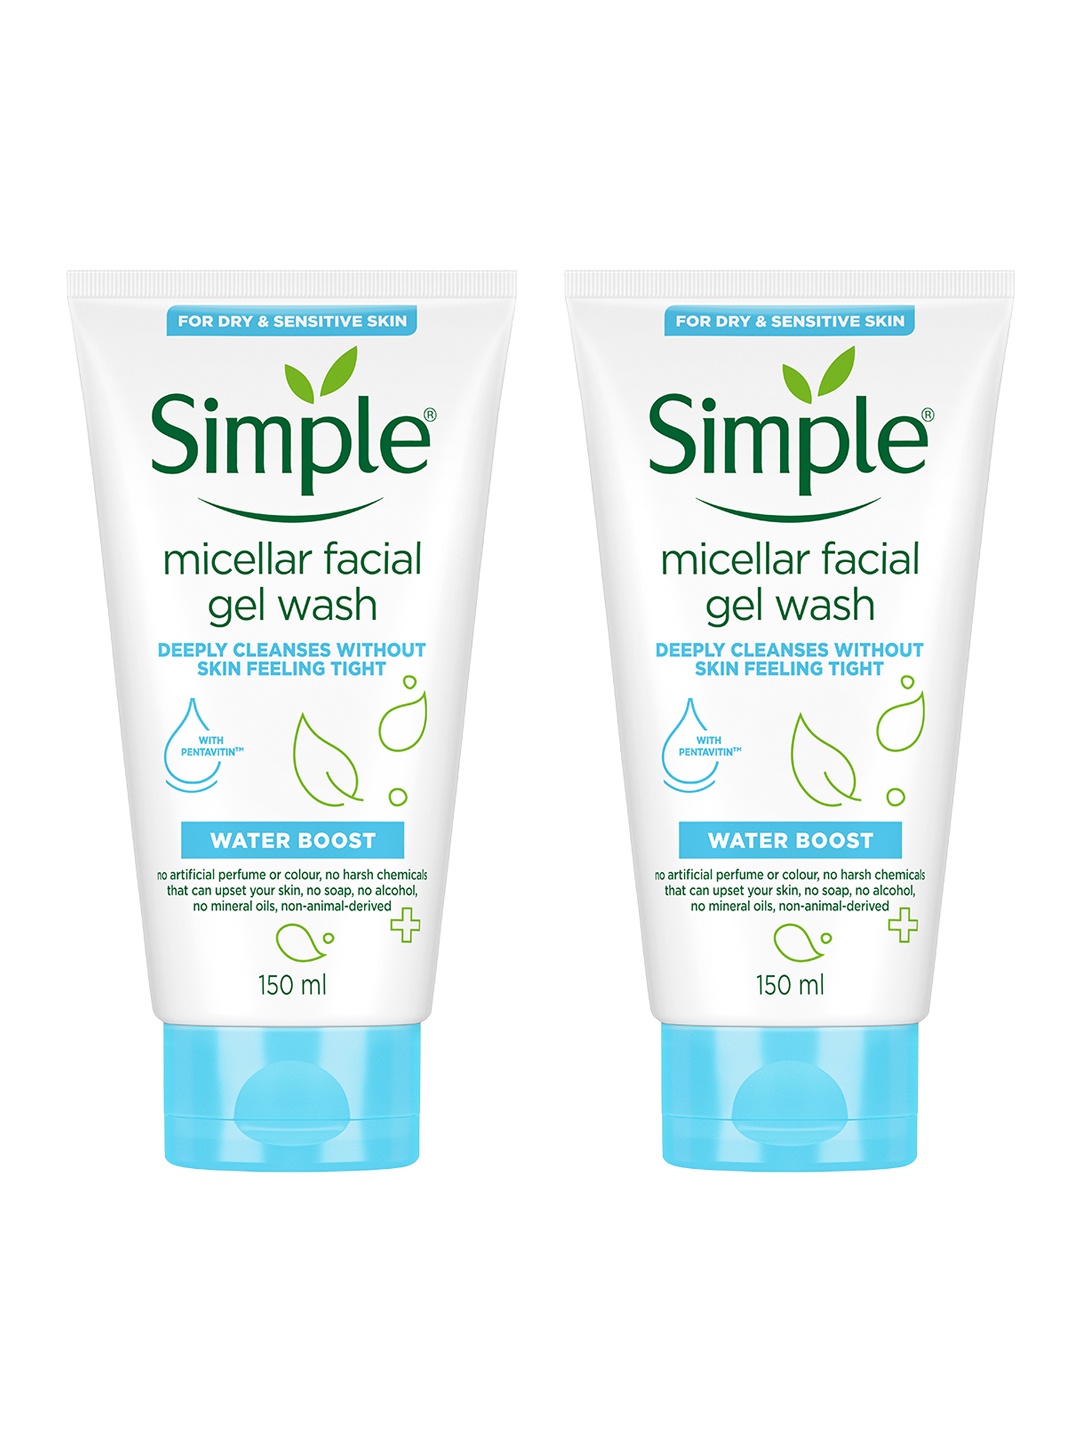 

Simple Set Of 2 Water Boost Micellar Facial Gel Wash - 150ml Each, White